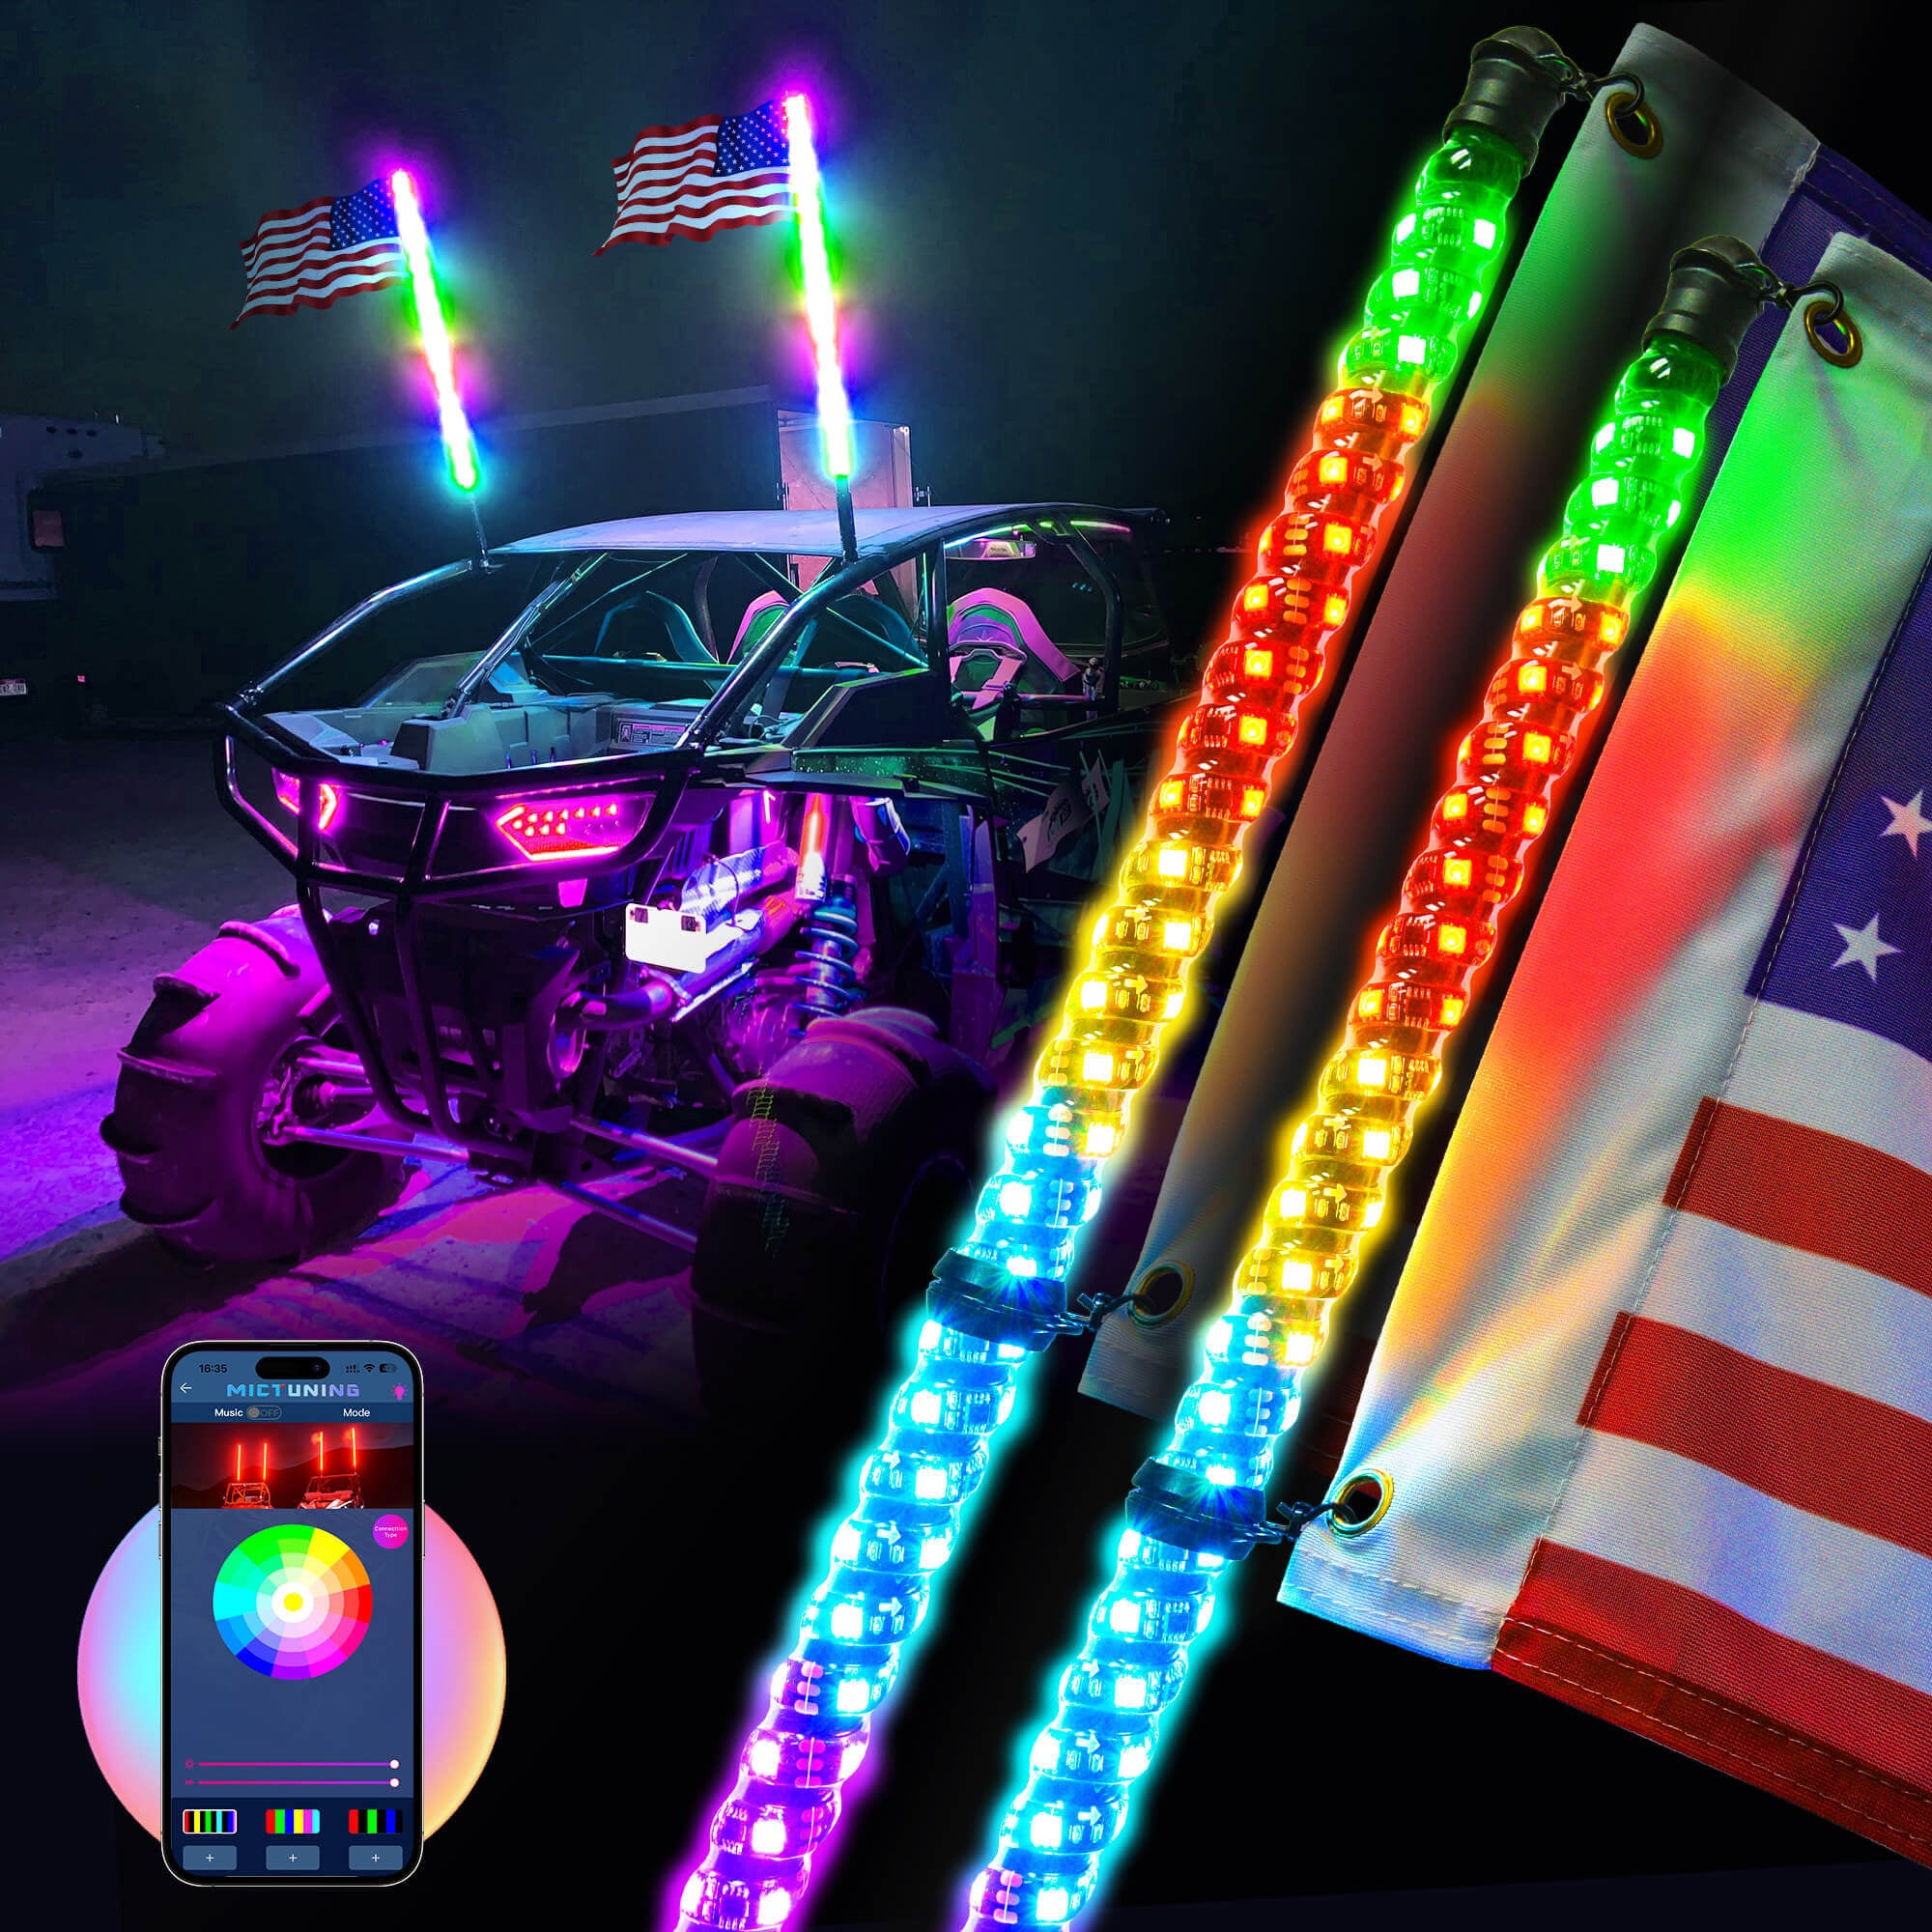 2Pcs 4FT RGB LED Whip Lights with Turn Signal & Brake Light + RGB LED